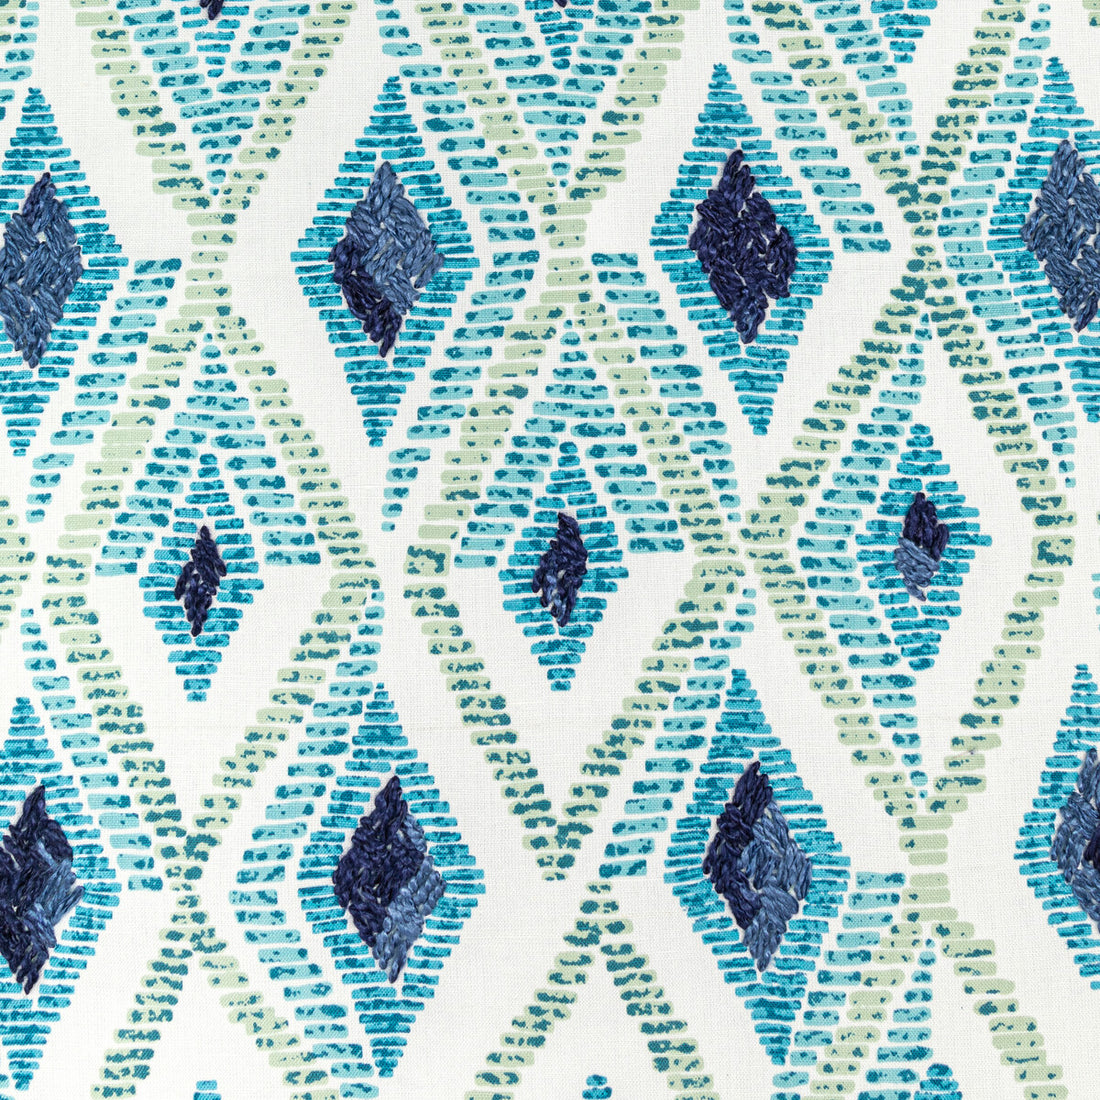 Antiparos fabric in splash color - pattern ANTIPAROS.516.0 - by Kravet Design in the Nadia Watts Gem collection